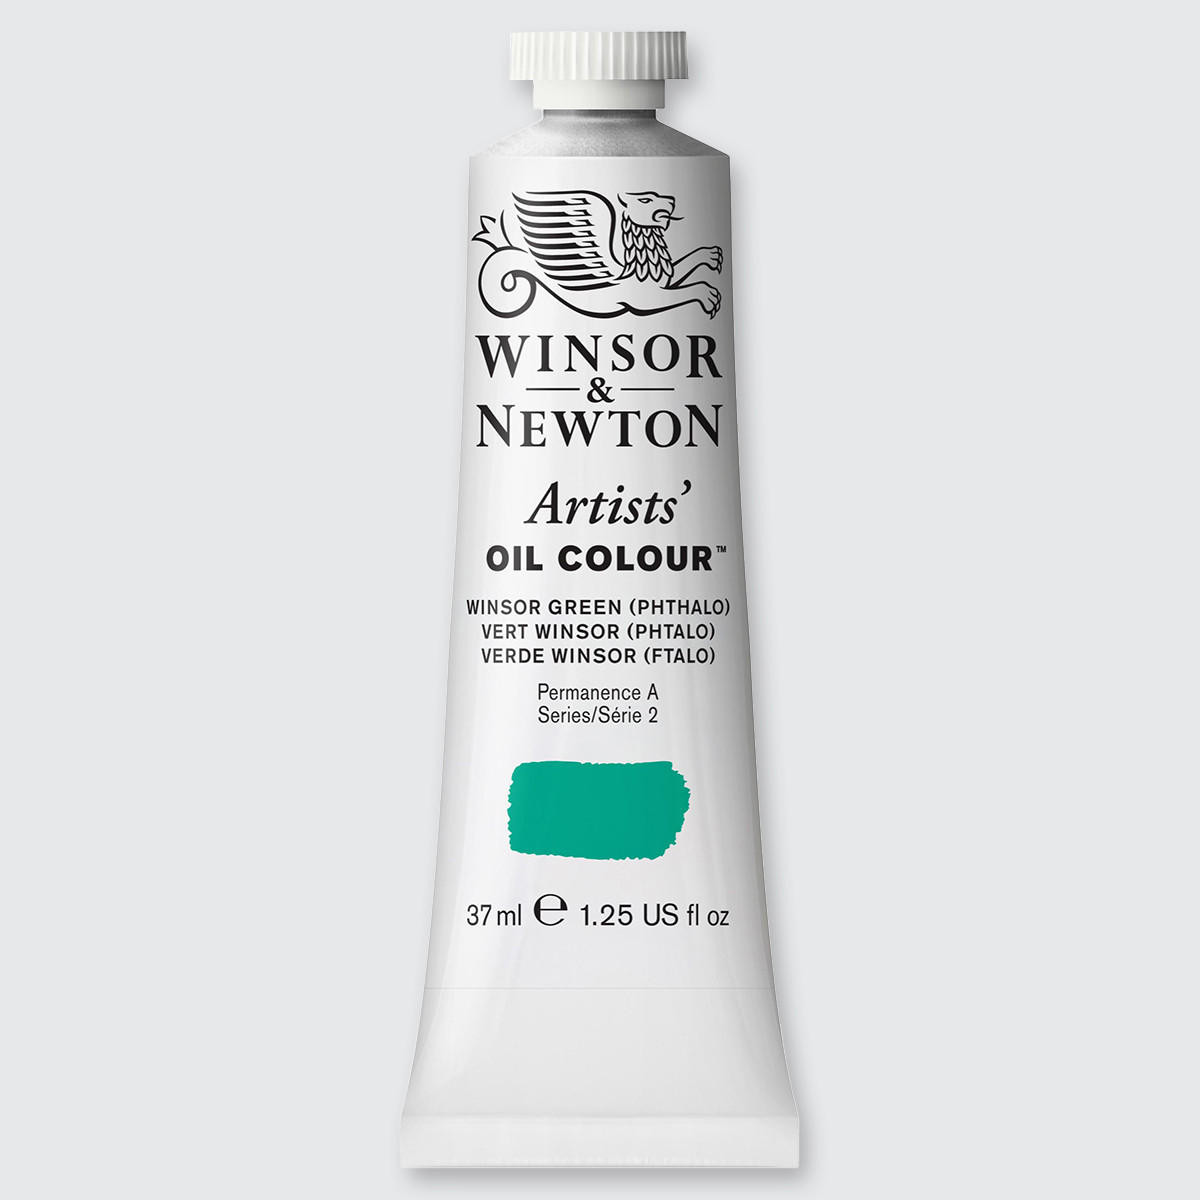 Winsor & Newton Artists’ Oil Colour 37ml Winsor Green (Phthalo)